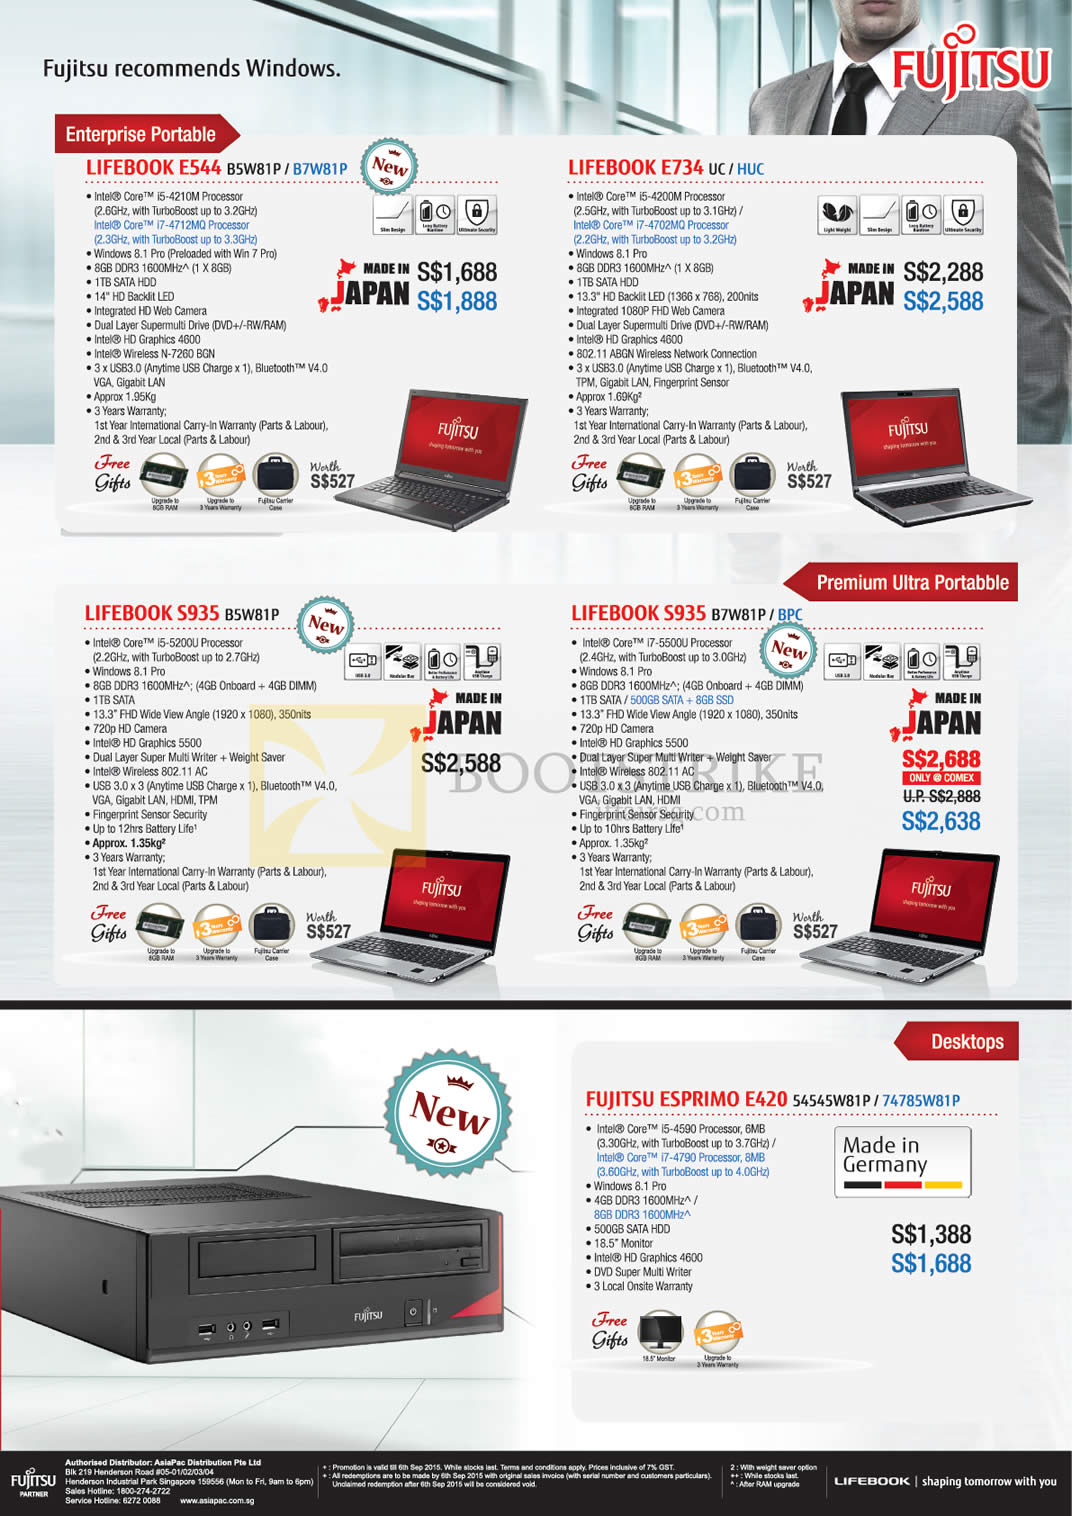 COMEX 2015 price list image brochure of Fujitsu Notebooks Desktop PC, Lifebook E544 B5W81P, B7W81P, E734 UC HUC, S935 B5W81P, S935 B7W81P BPC, ESPRIMO E420 54545W81P 74785W81P